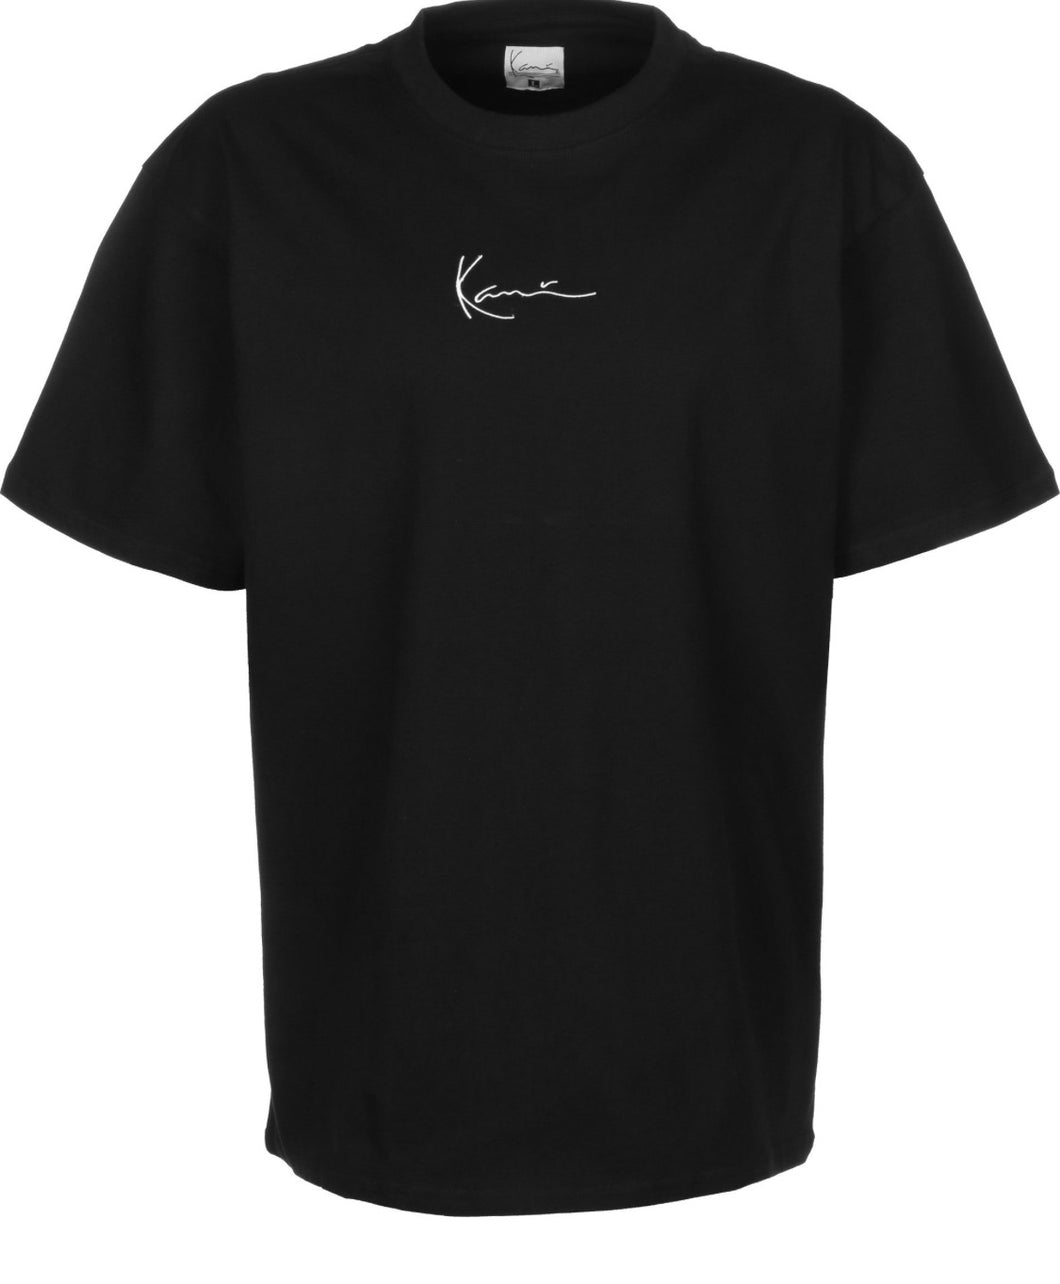 Karl Kani Small Signature T-Shirt black/white